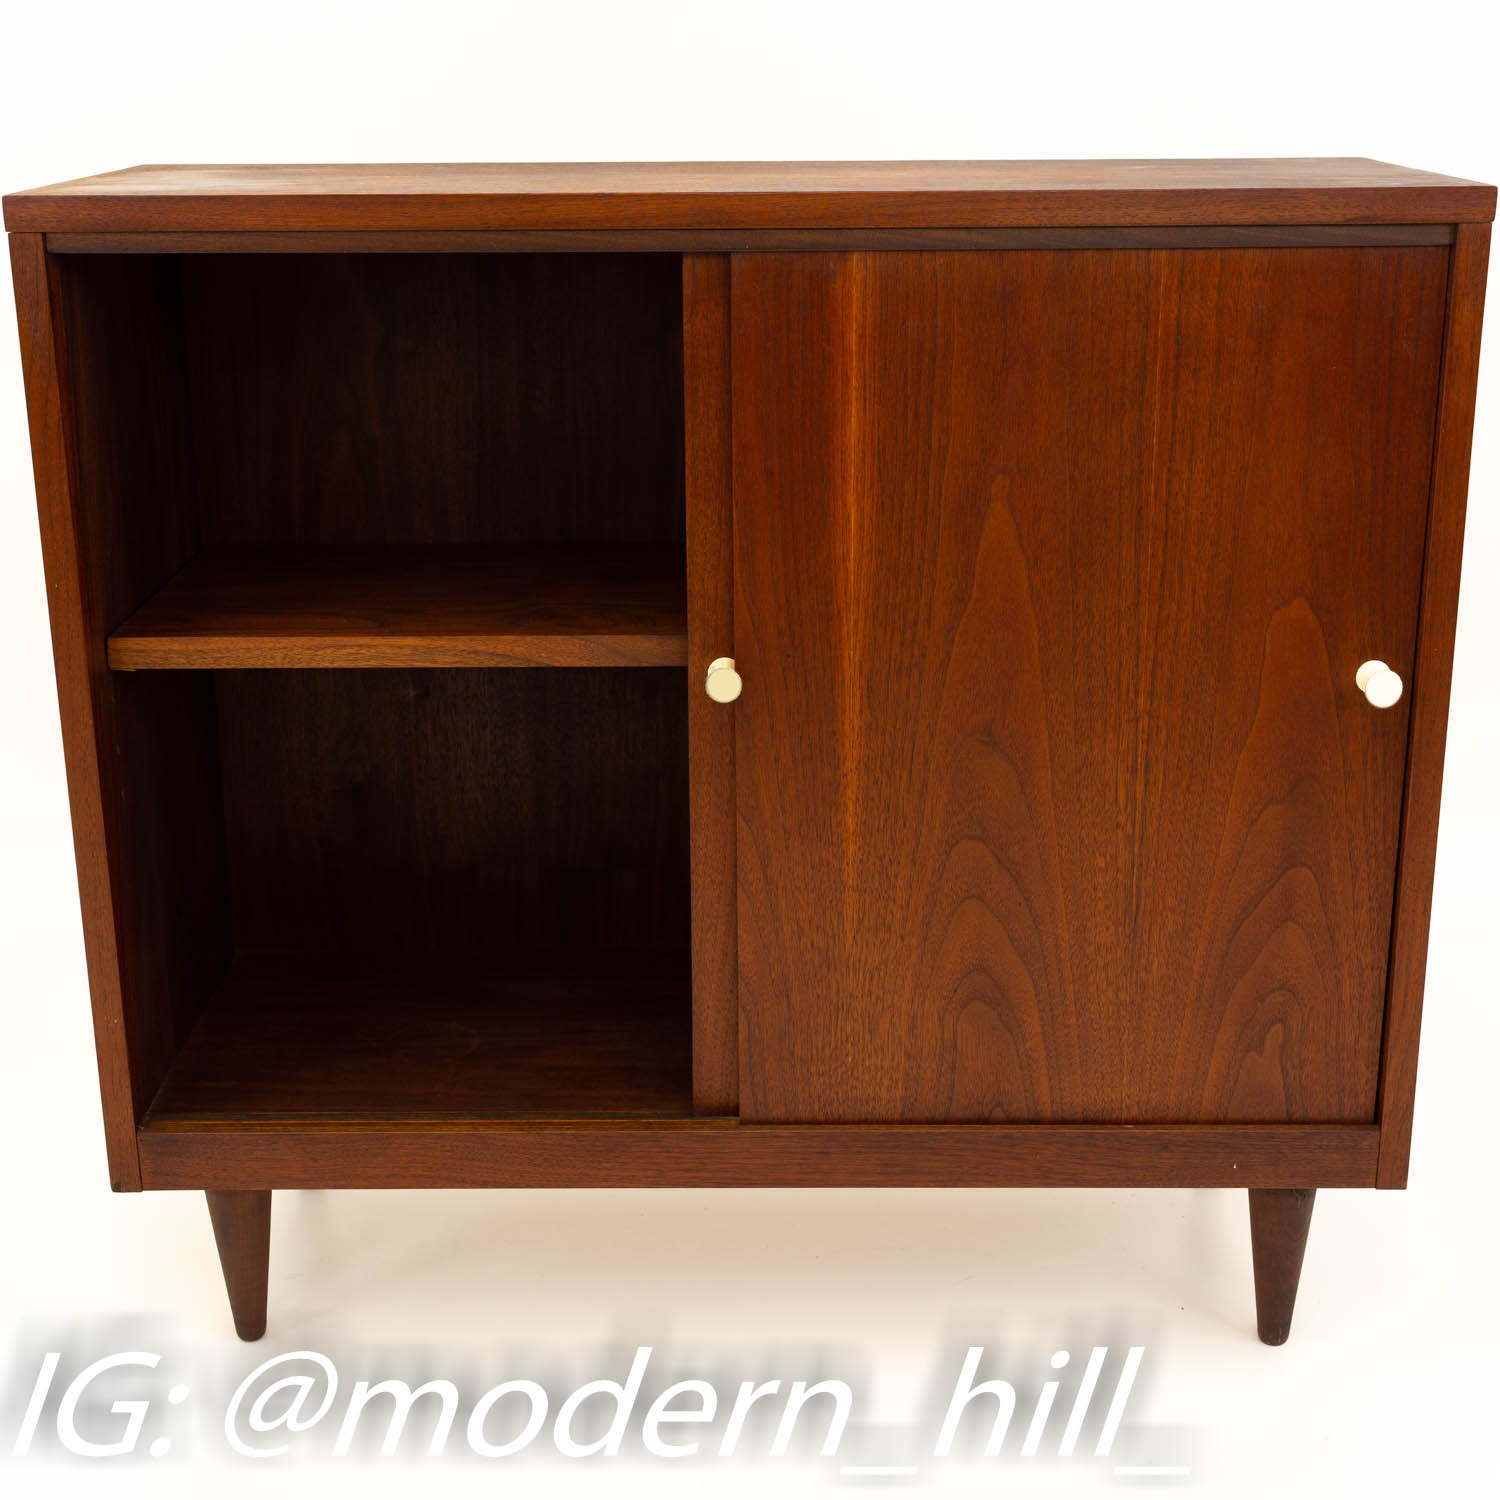 Crescent Furniture Mid Century Walnut Console Media Cabinet